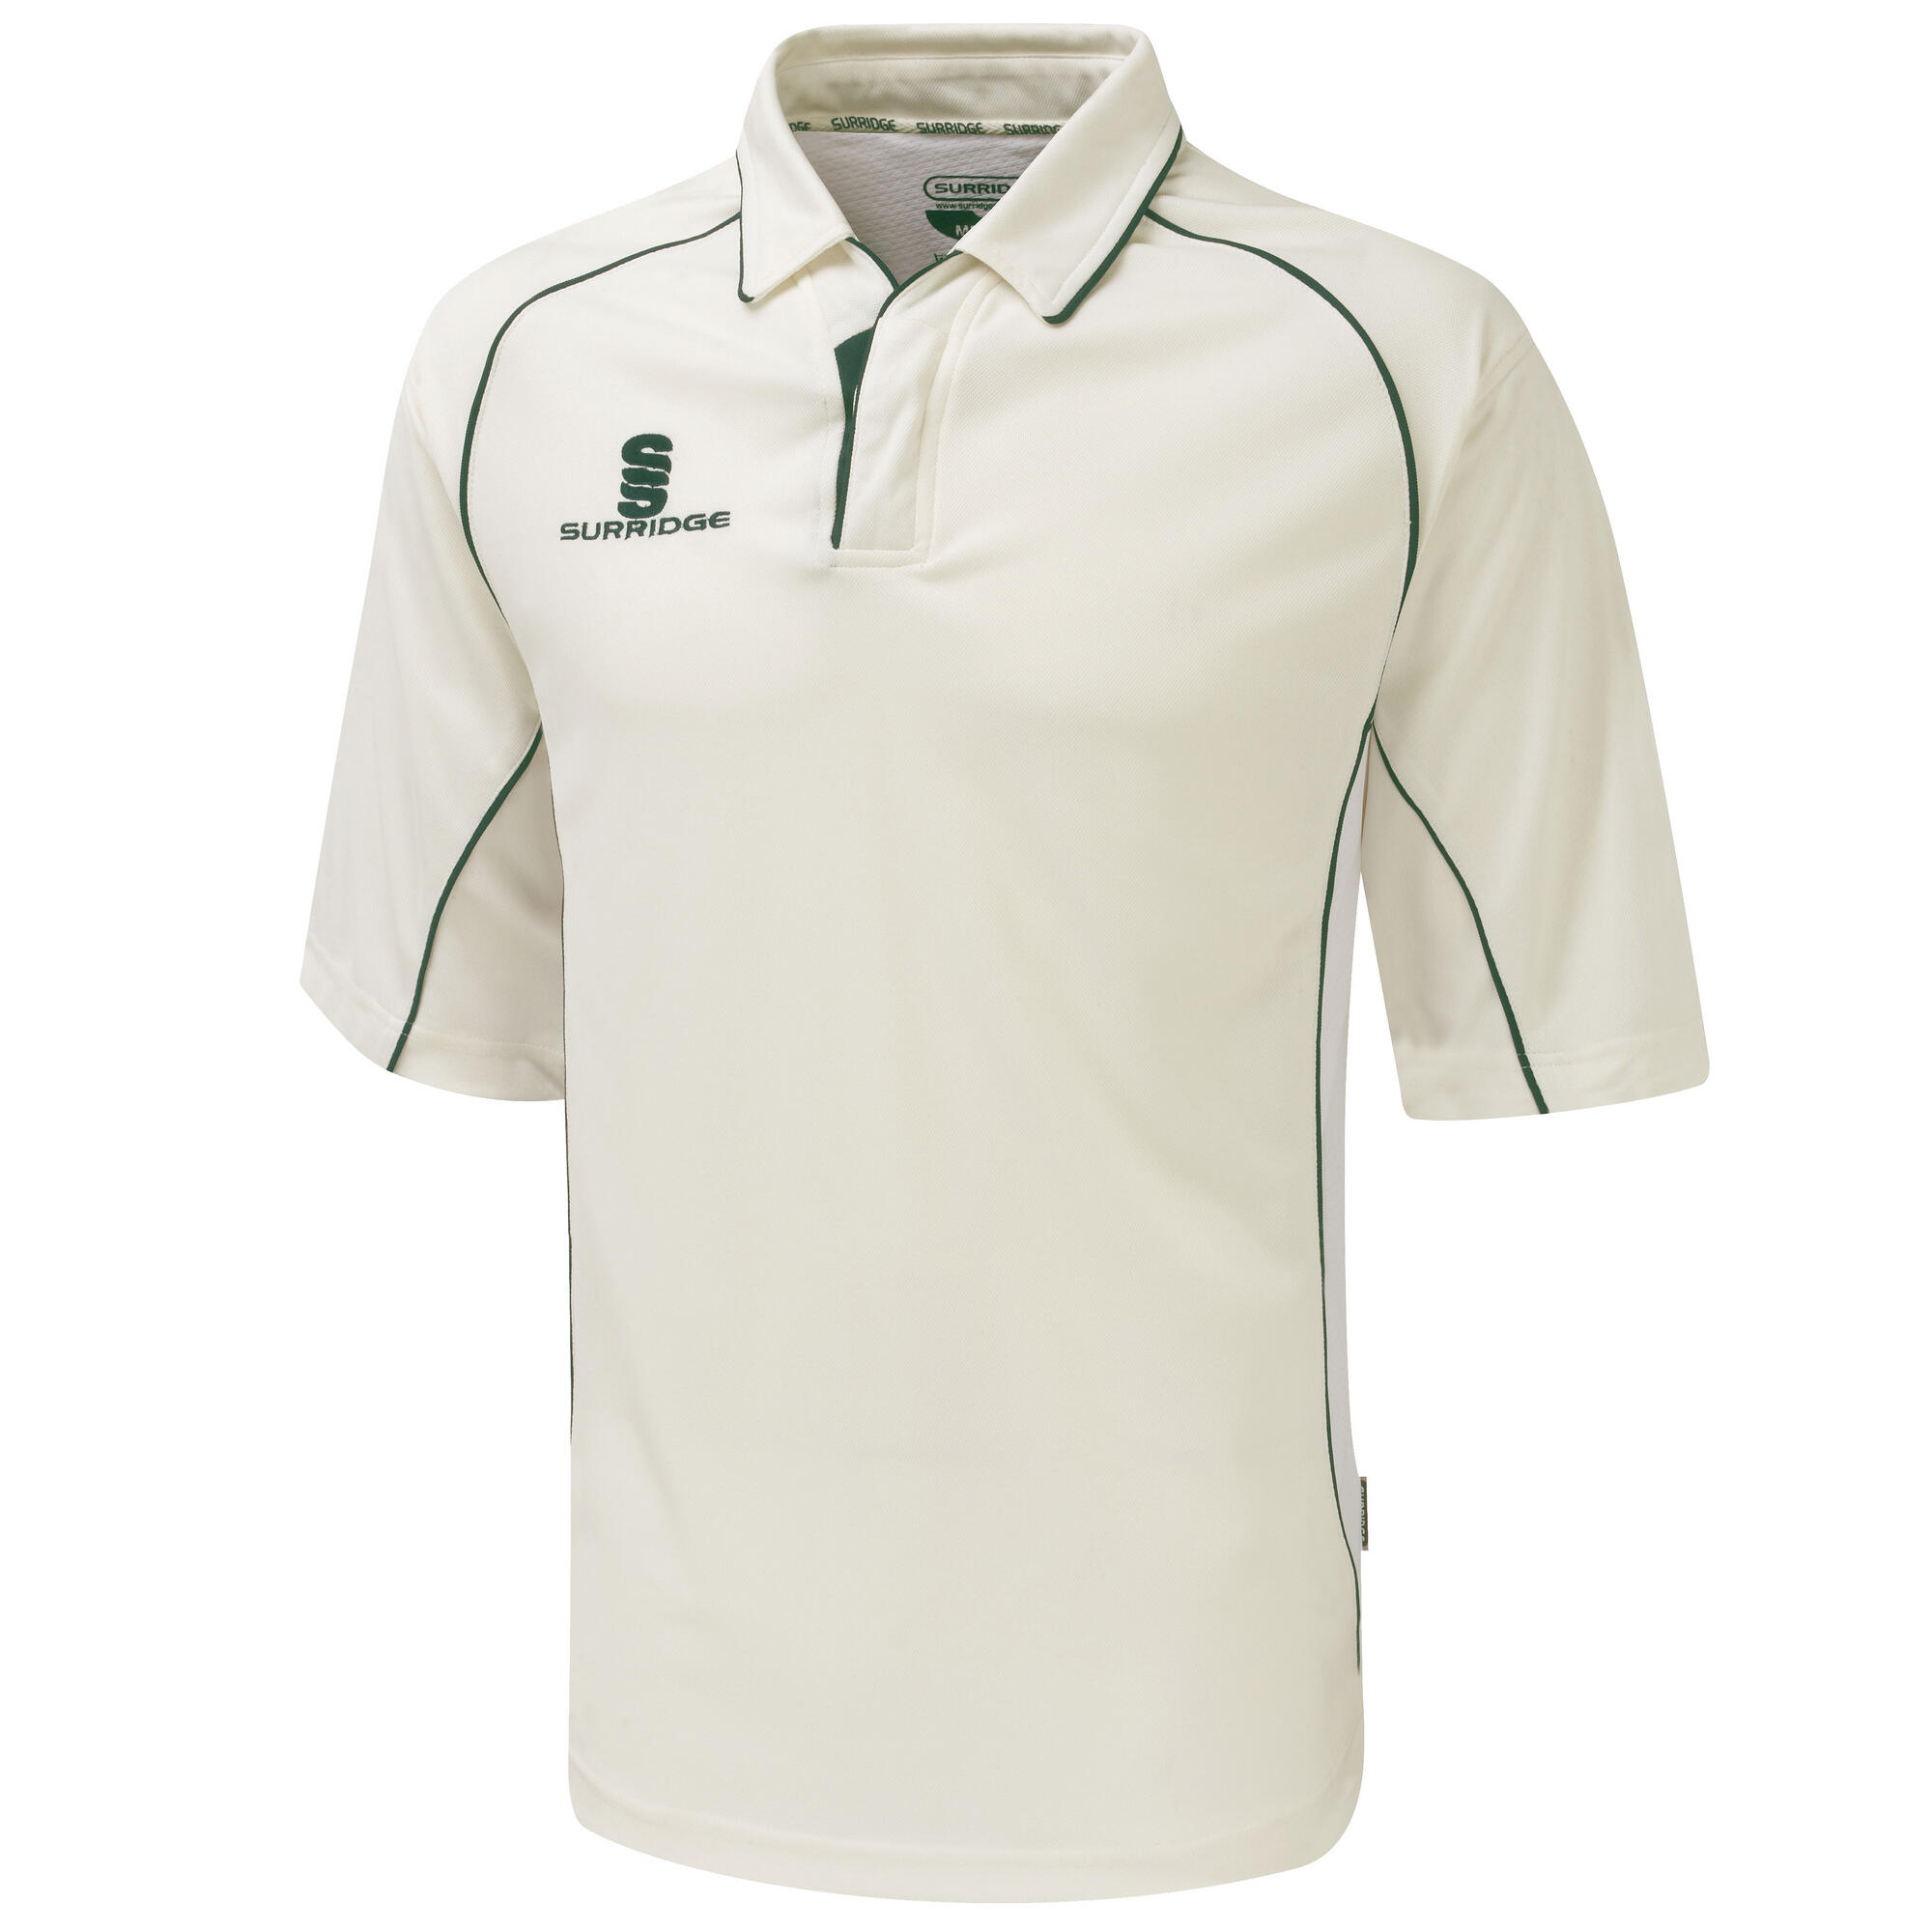 SURRIDGE Boys Kids Sports Premier Shirt 3/4 Polo Shirt (White/Green trim)